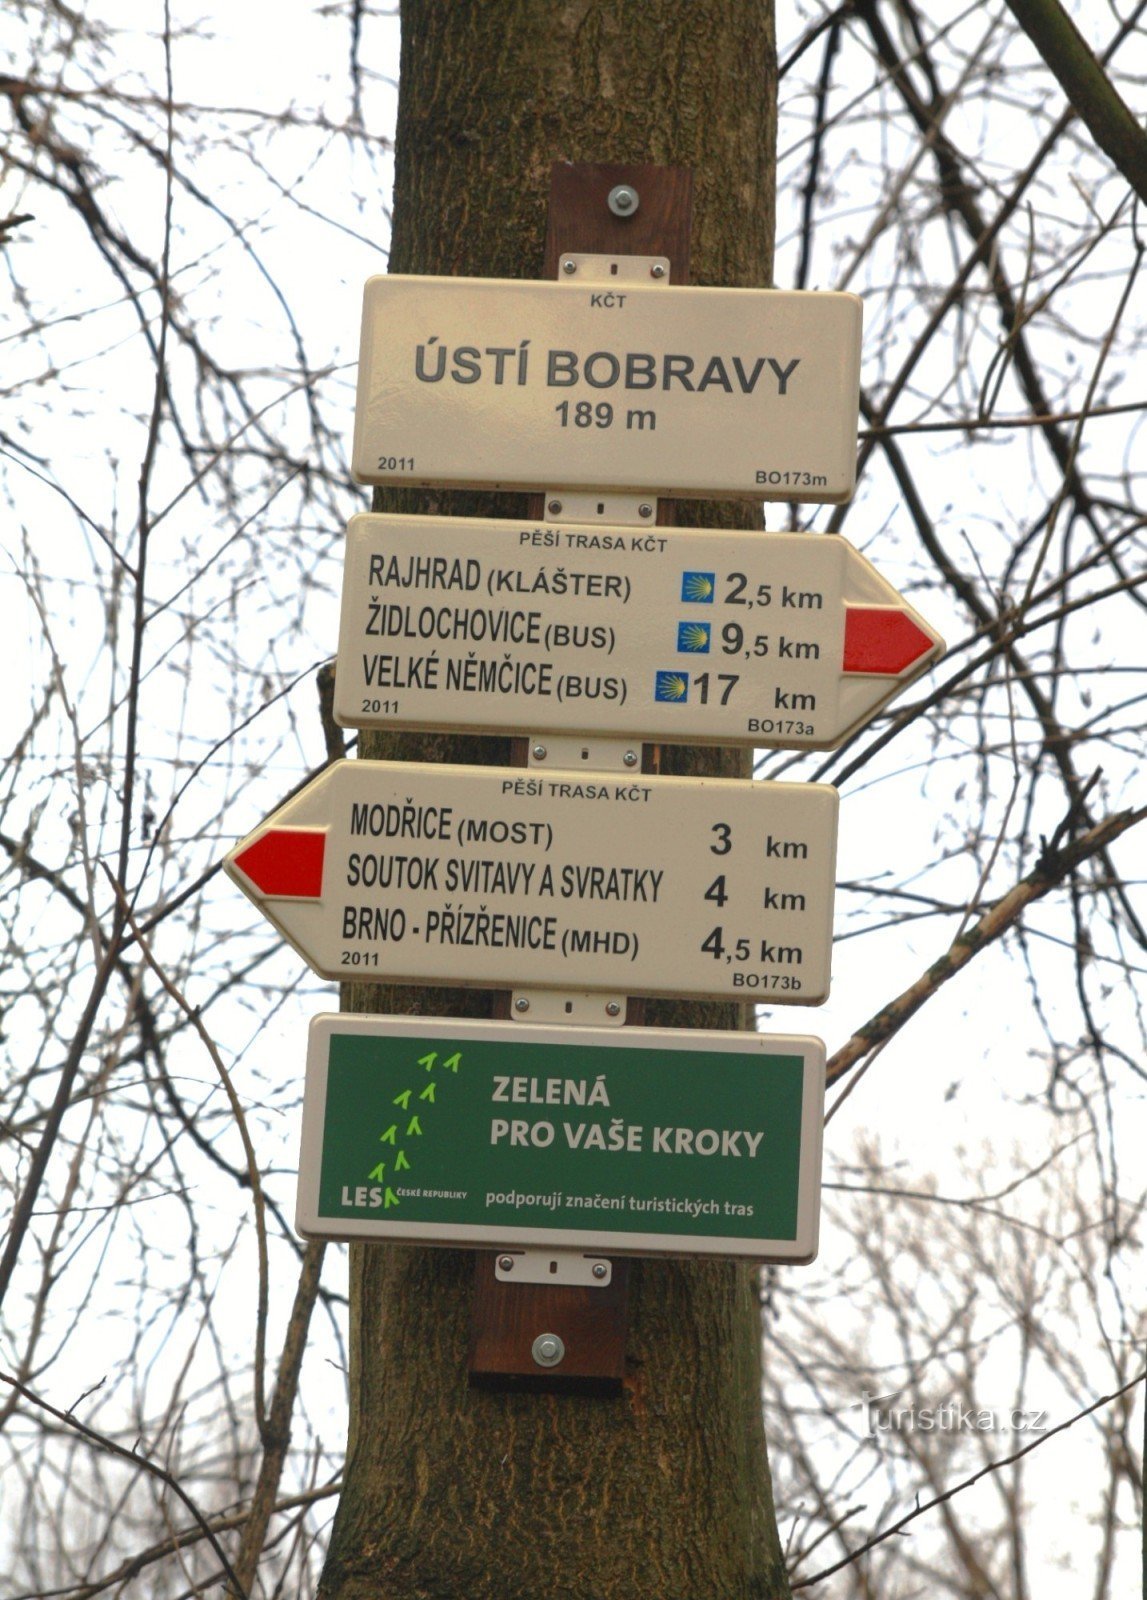 Encruzilhada turística de Ústí Bobrava